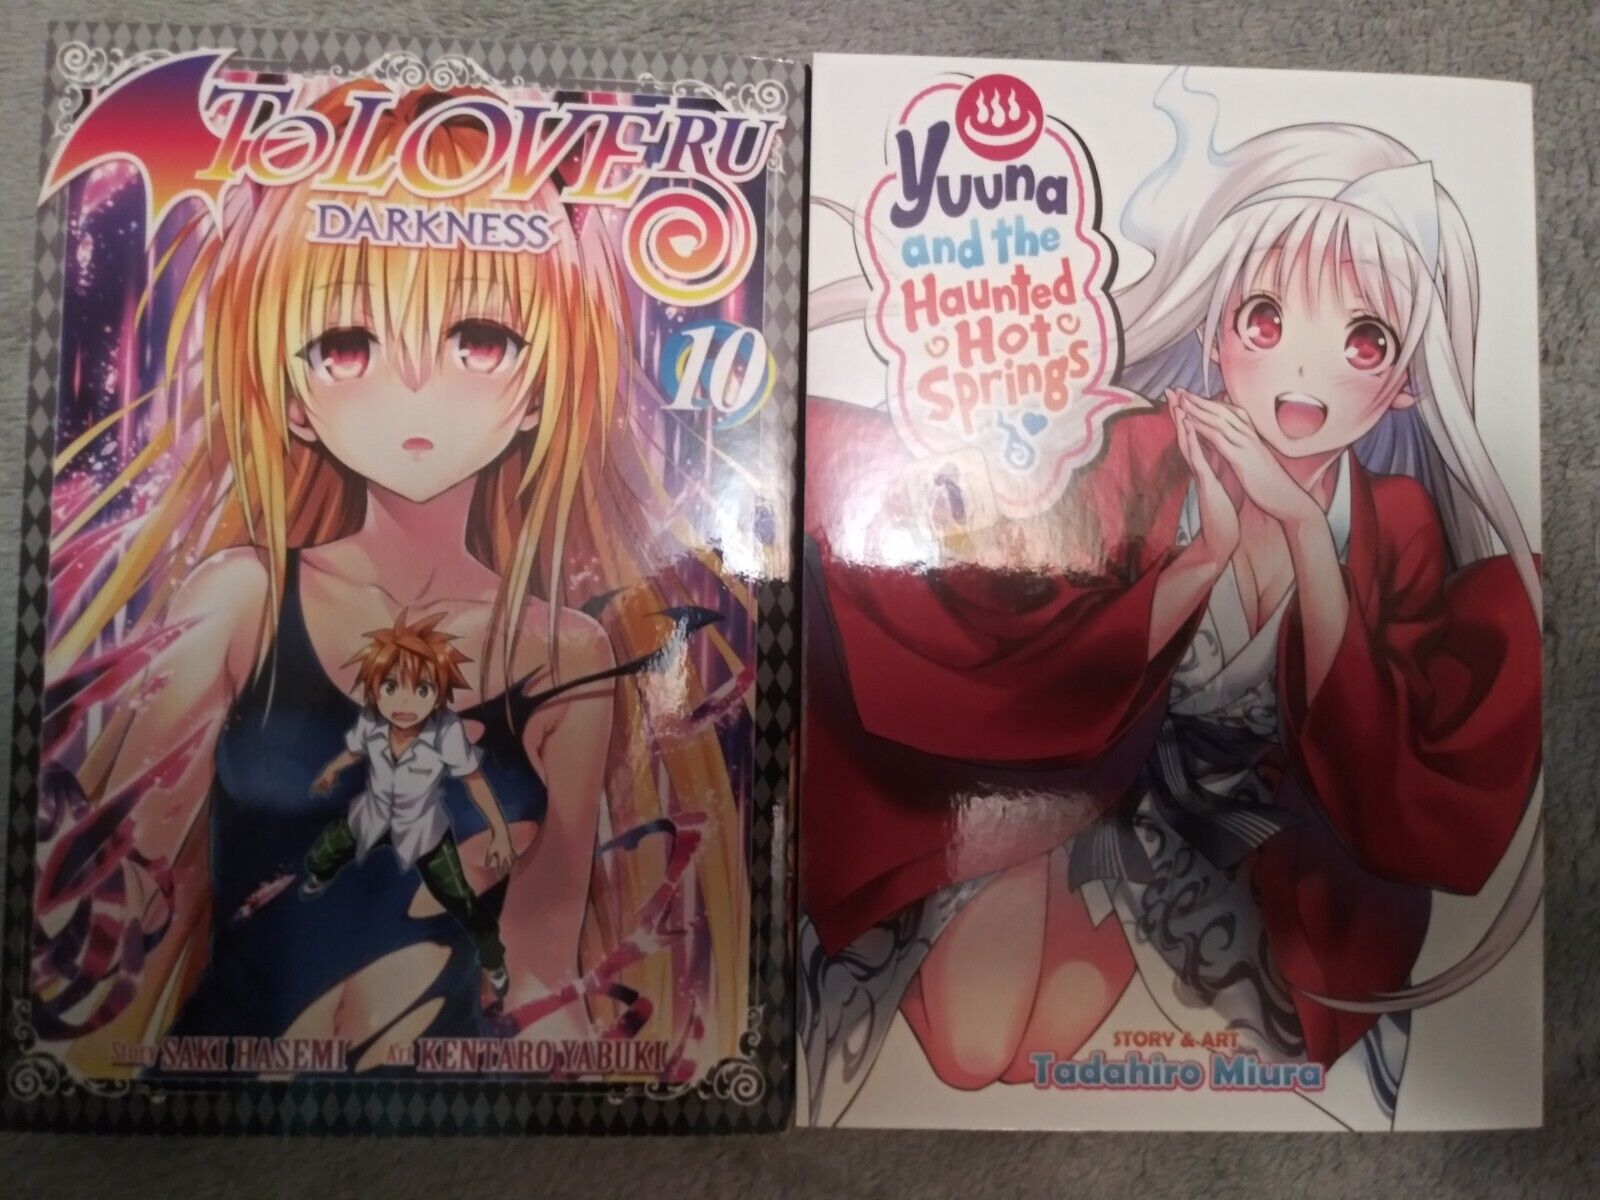 2x English Manga Yuuna and the Haunted Hot Spring Vol 1 ToLoveRu Darkness Vol 10